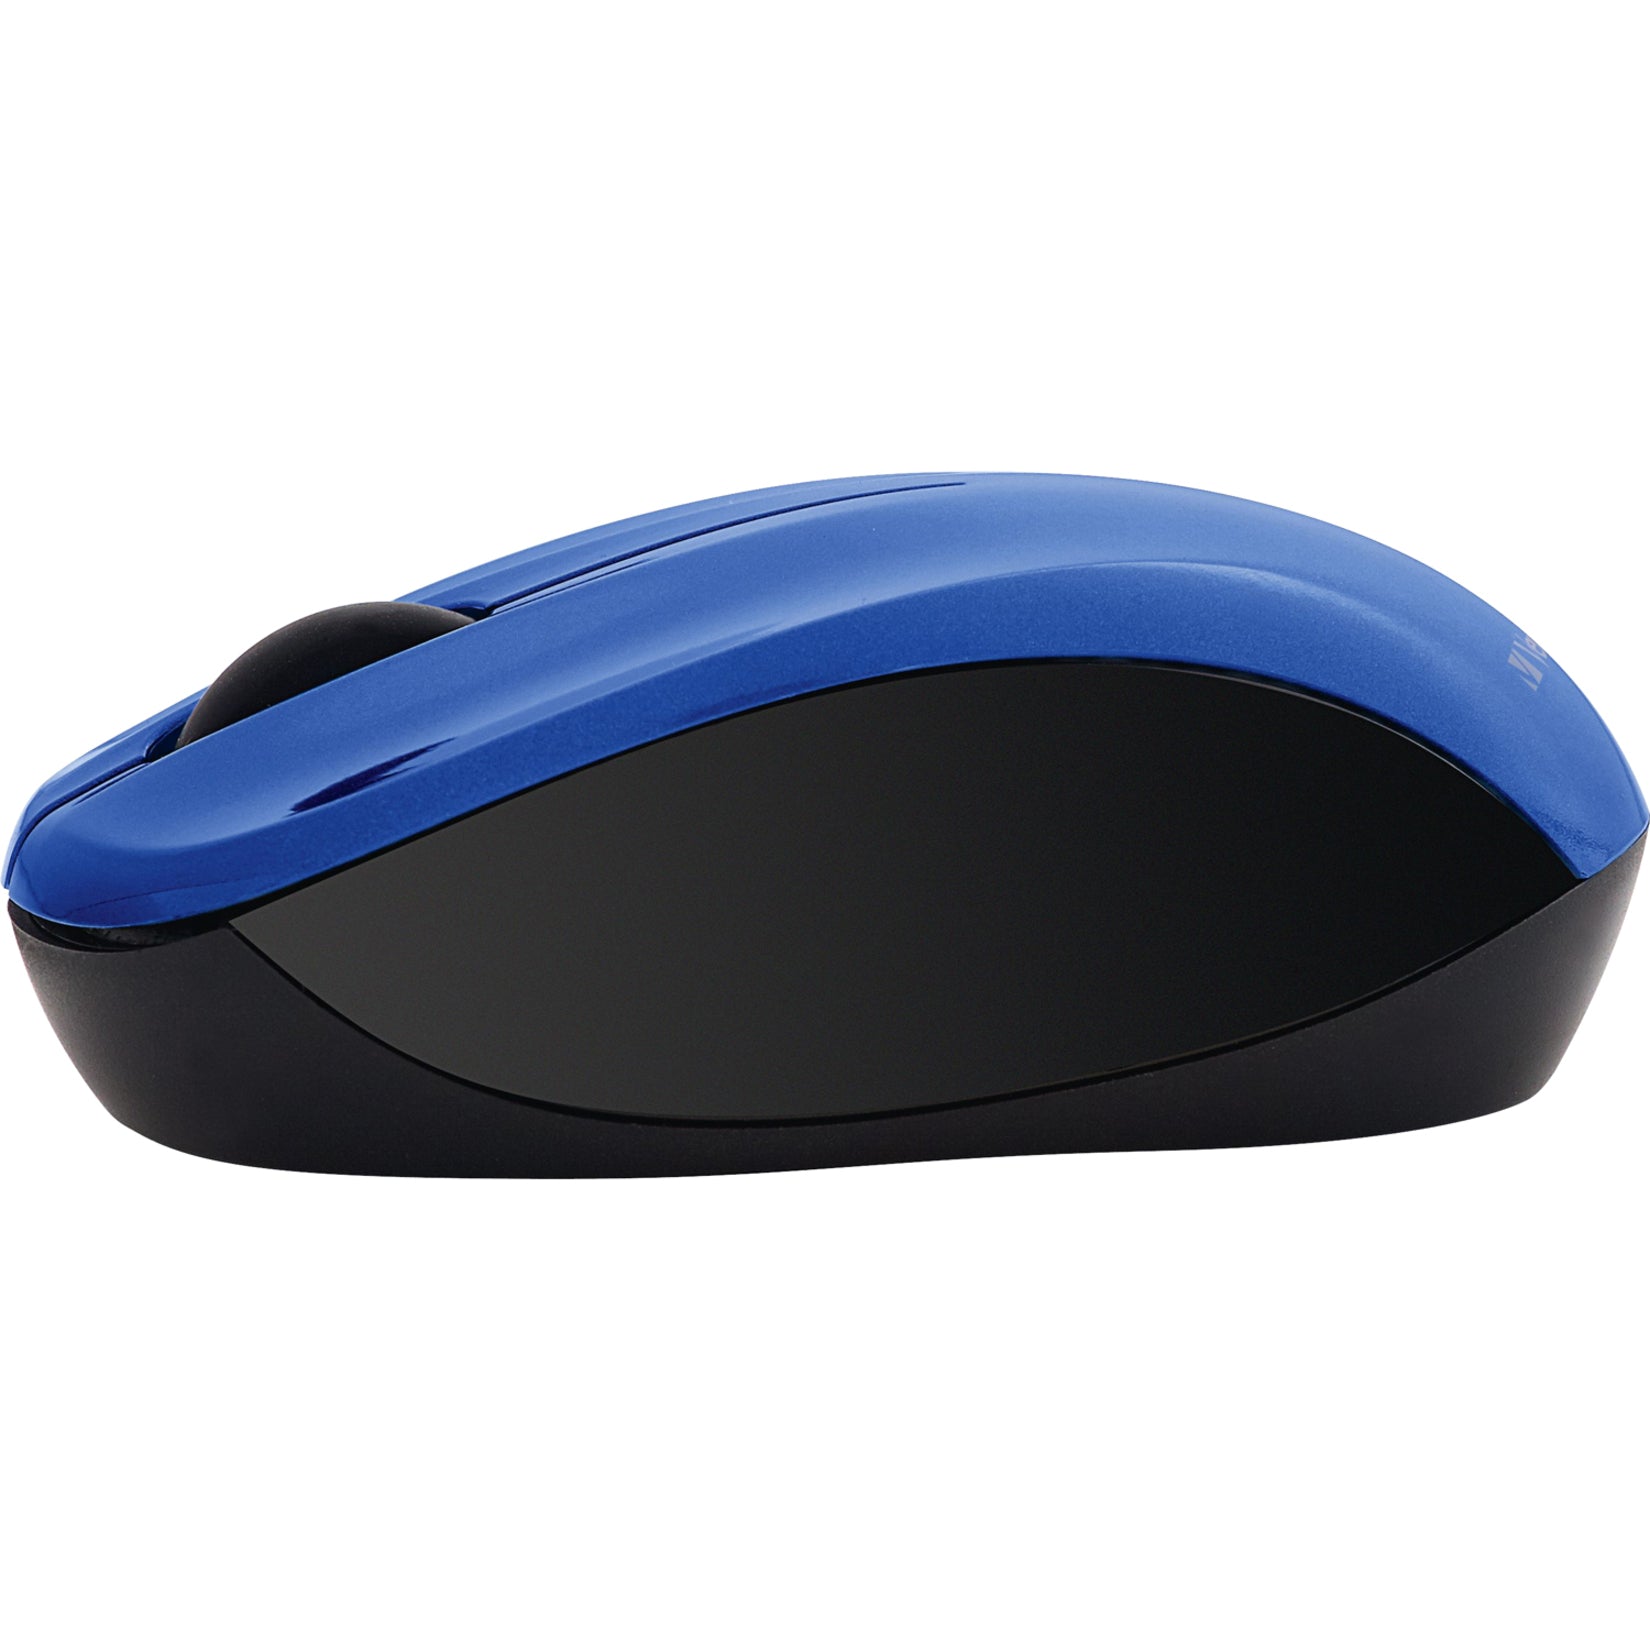 Verbatim 99770 Silent Wireless Blue LED Mouse - Blue, Wireless for PCs & Macs